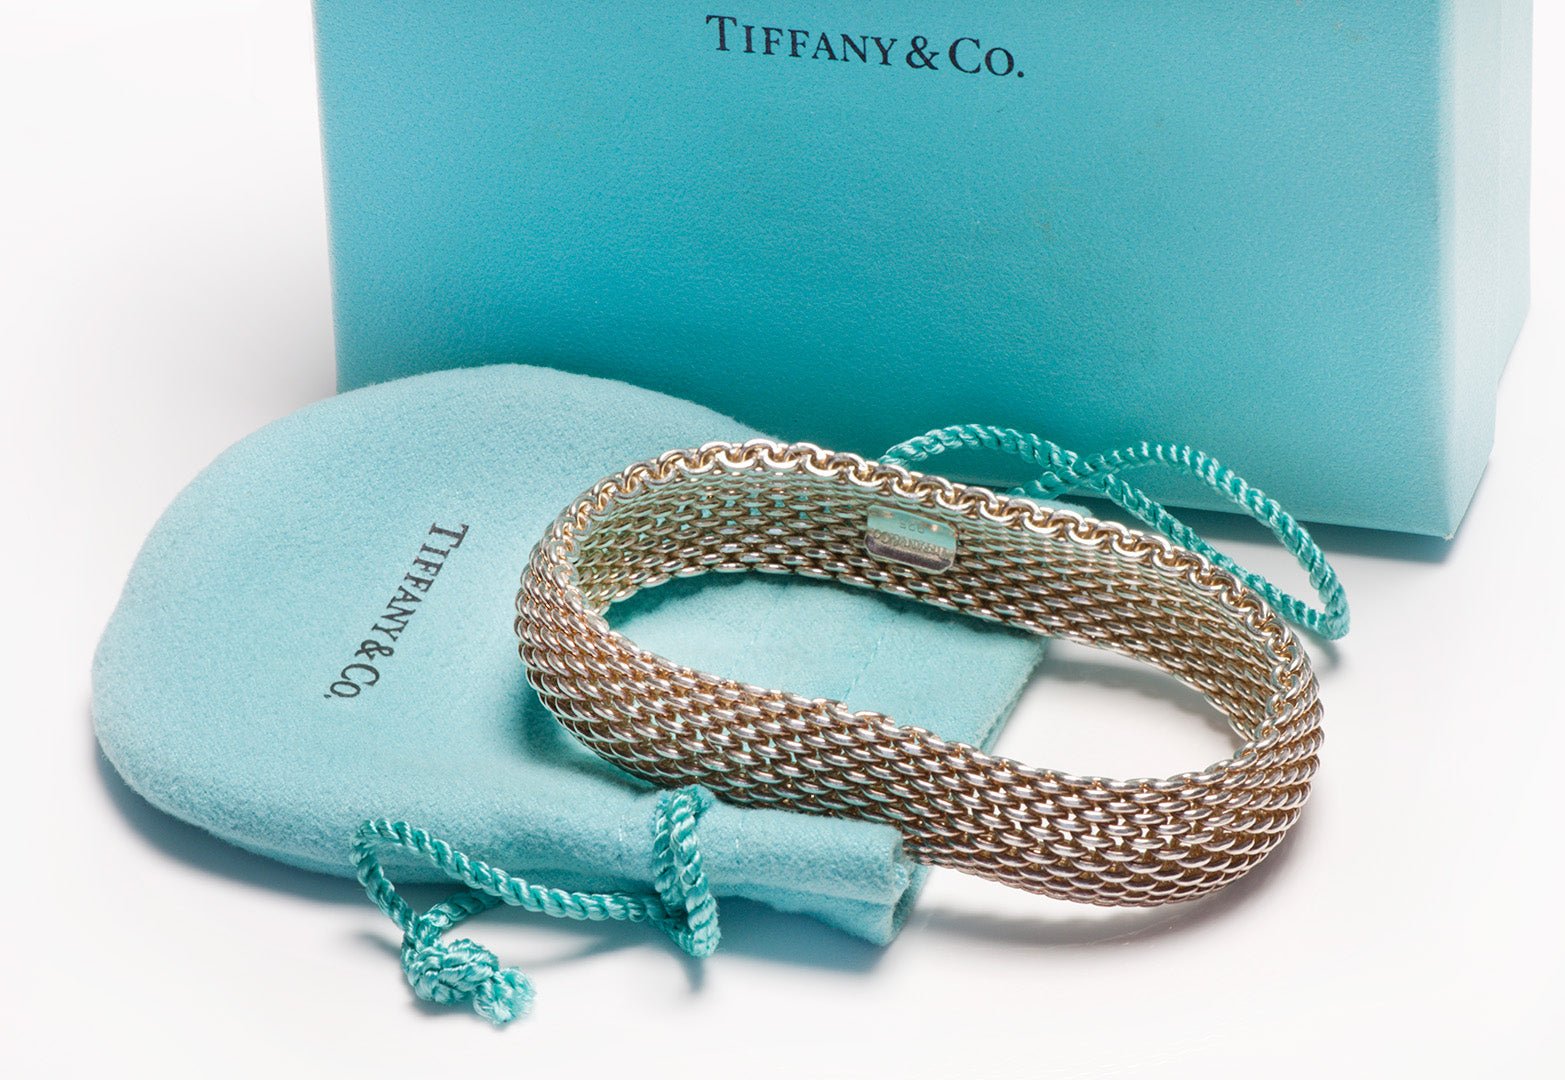 Tiffany & Co. Silver Woven Mesh Bracelet